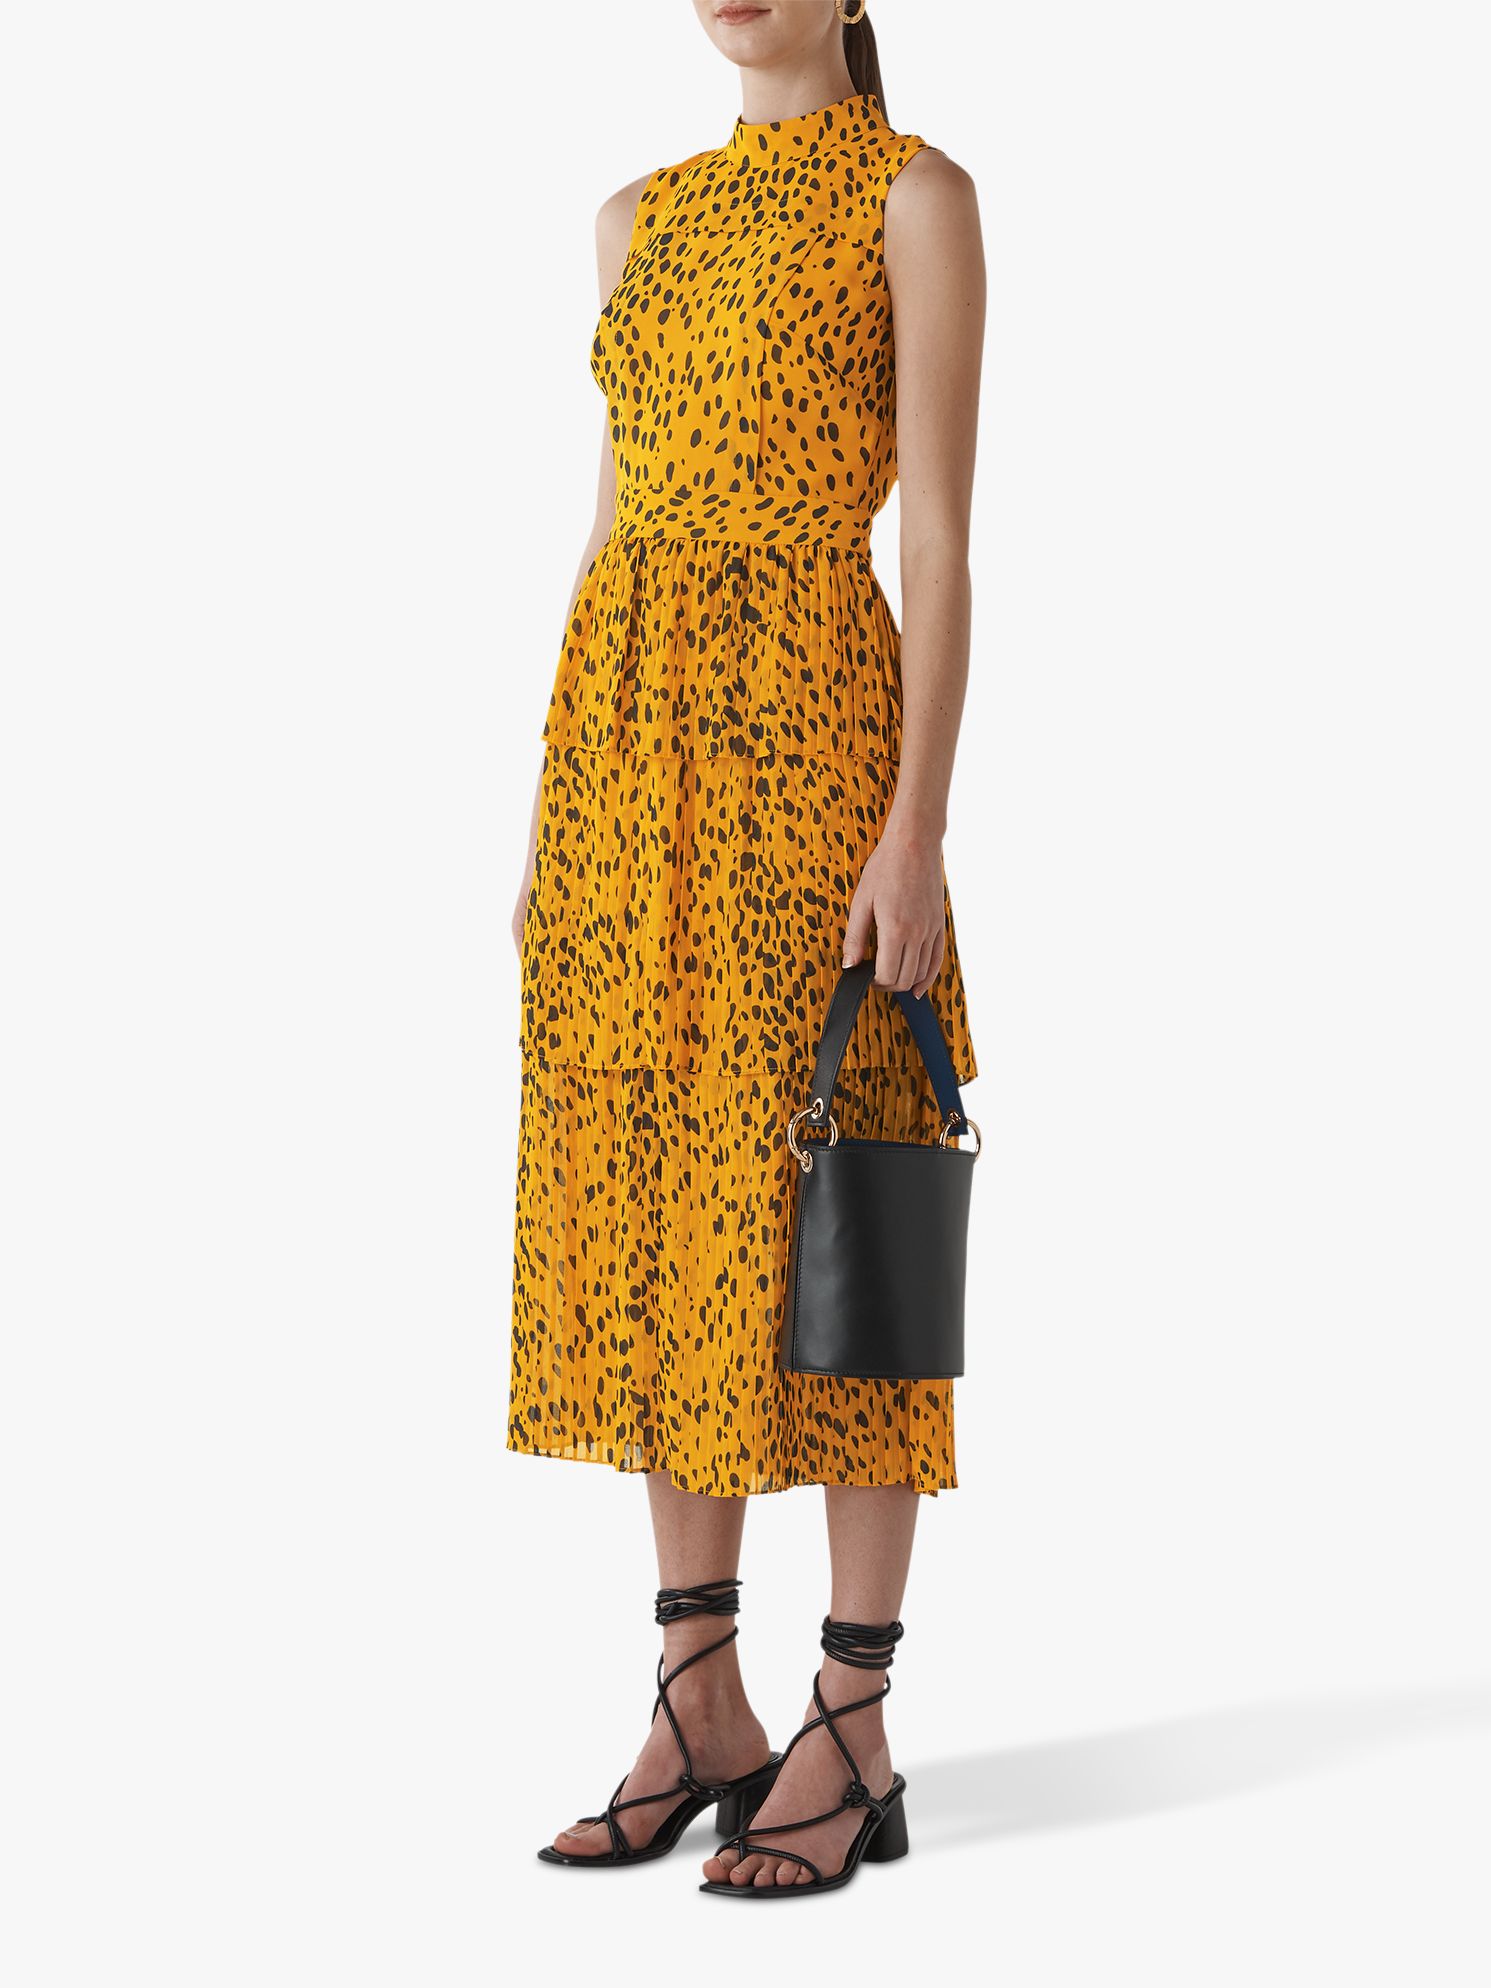 leopard print dress yellow